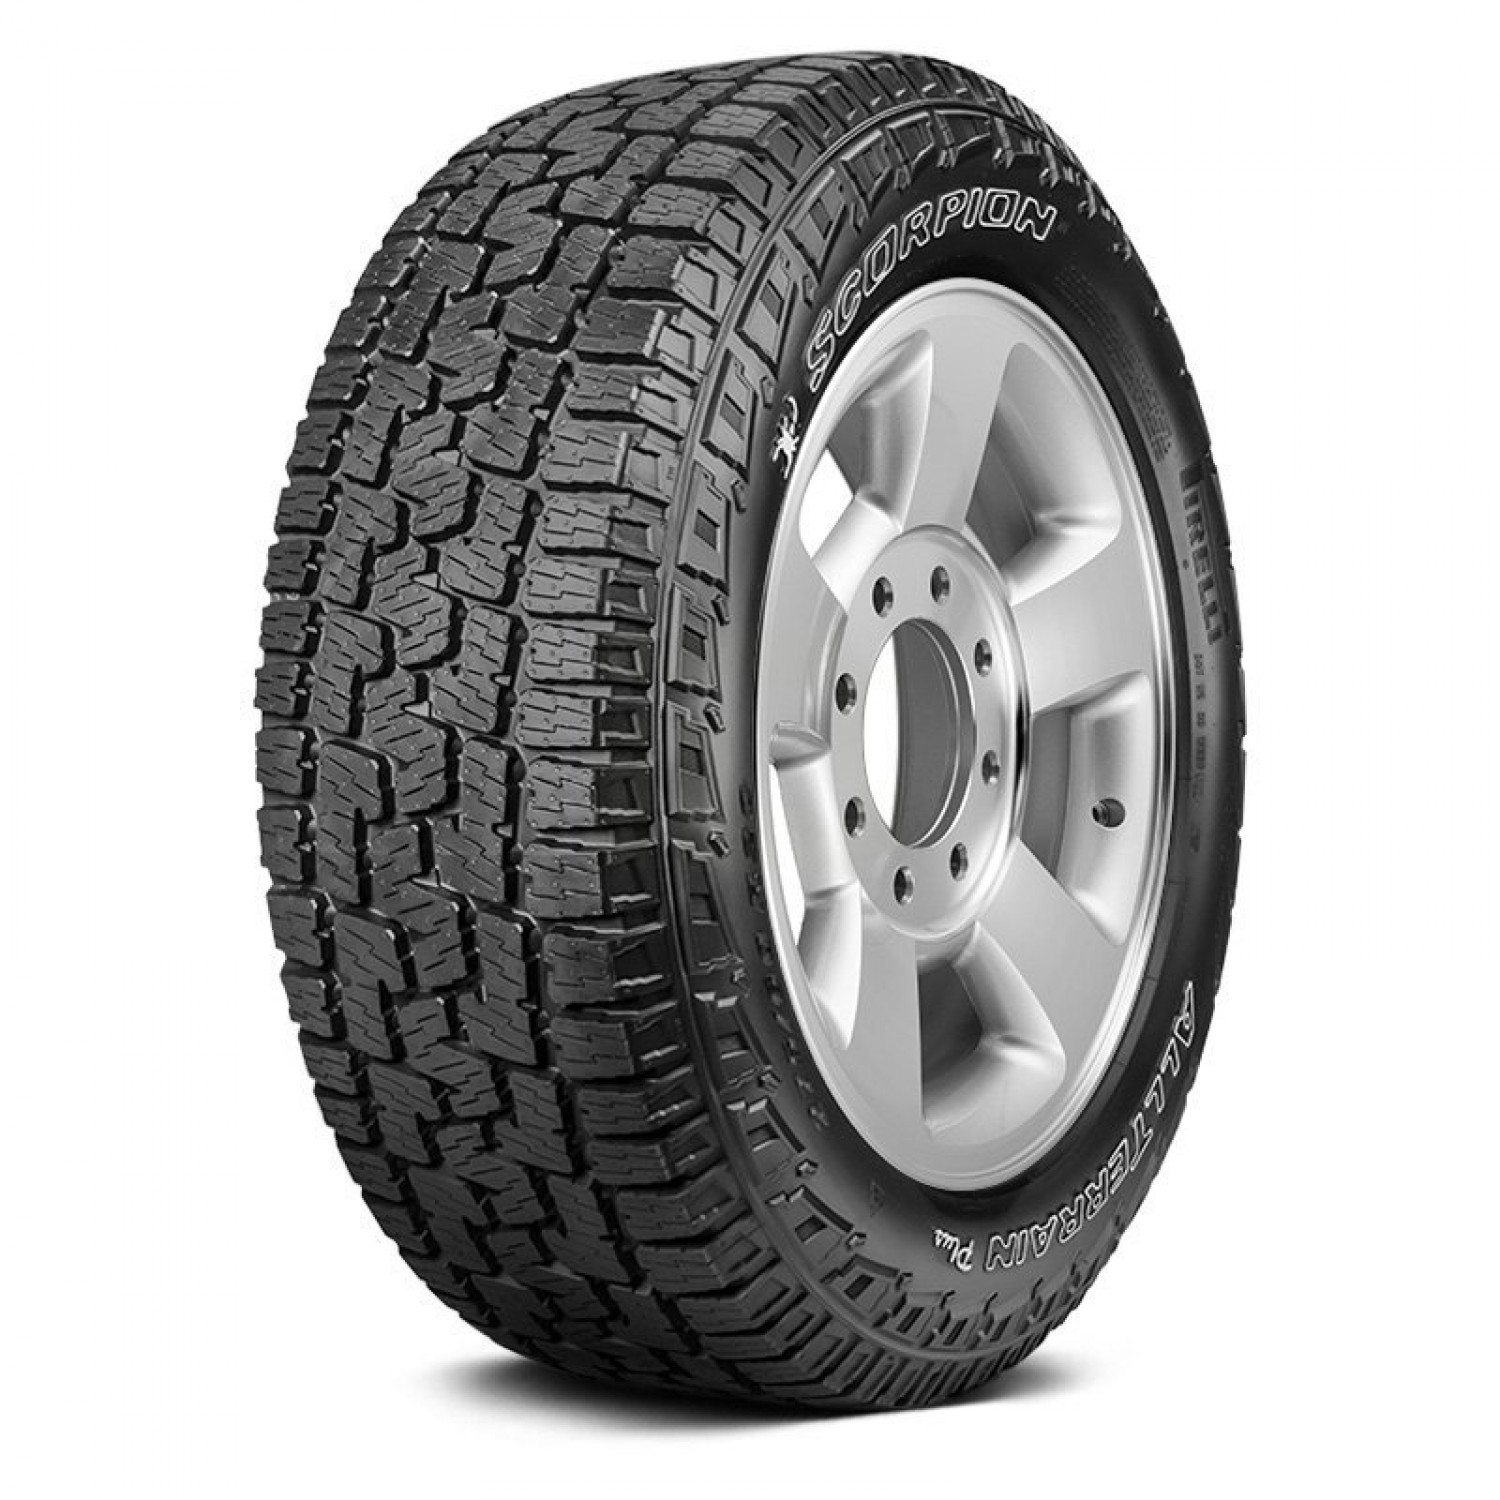 Pirelli Scorpion All Terrain Plus Raised White Letters Tire (LT275/65R20  126/123S) vzn121983